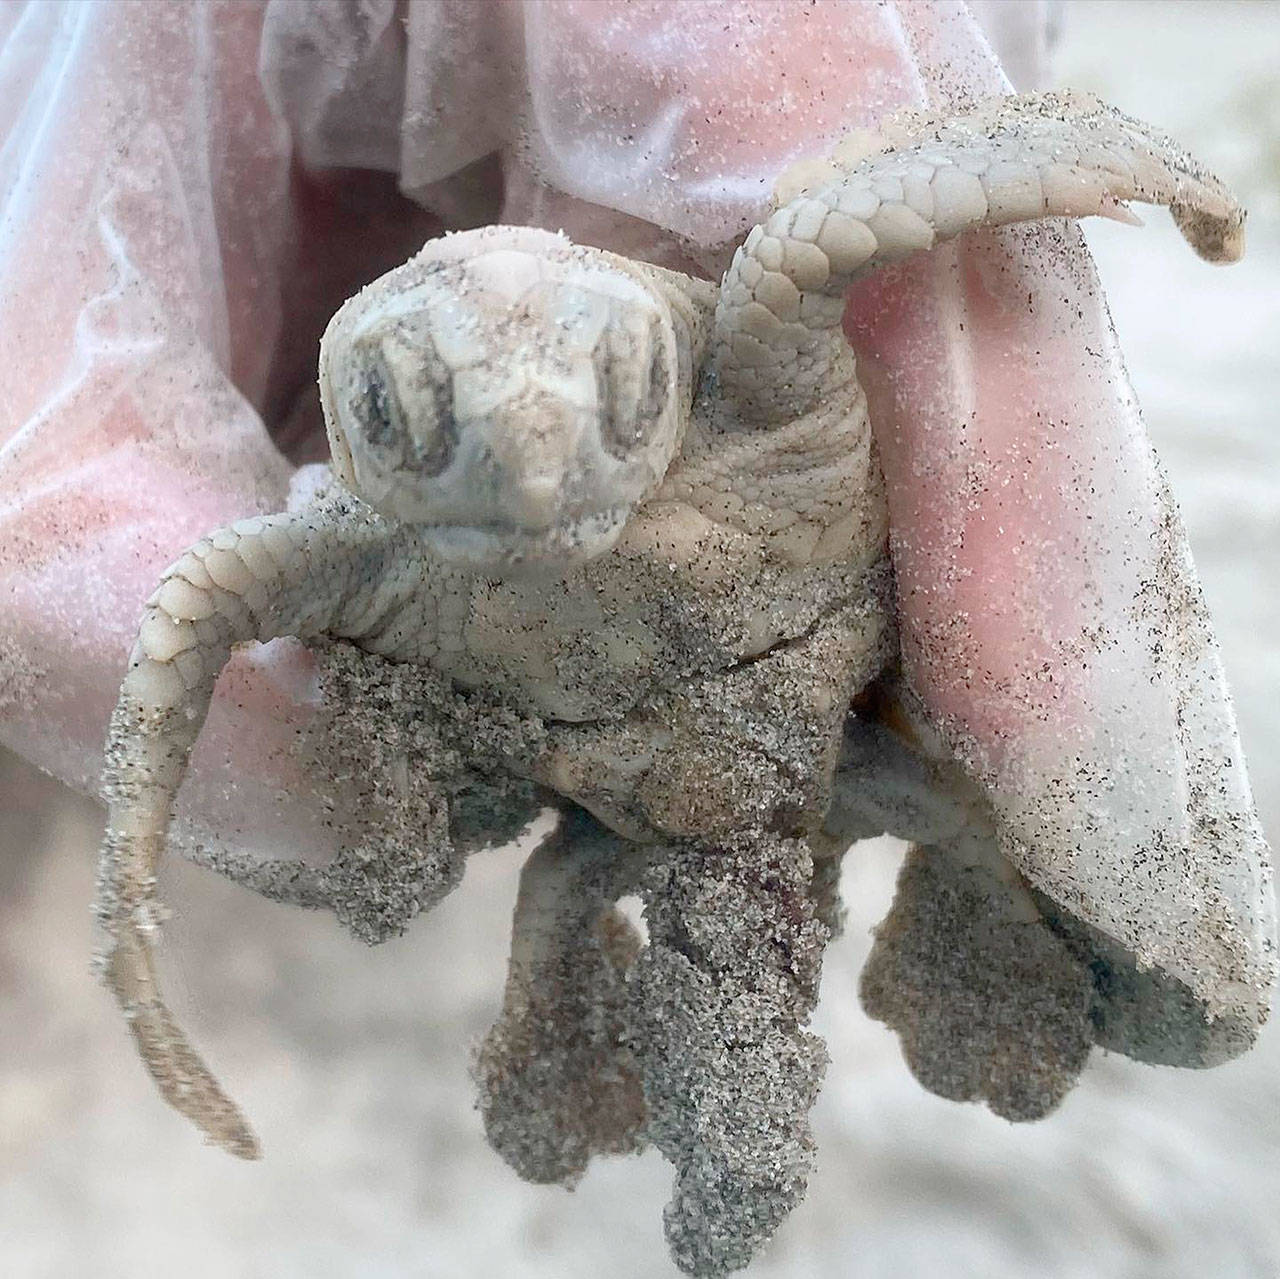 Wildlife experts are celebrating the birth of a rare white sea turtle on Kiawah Island in South Carolina. (Alison Frey/Town of Kiawah Island/TNS)